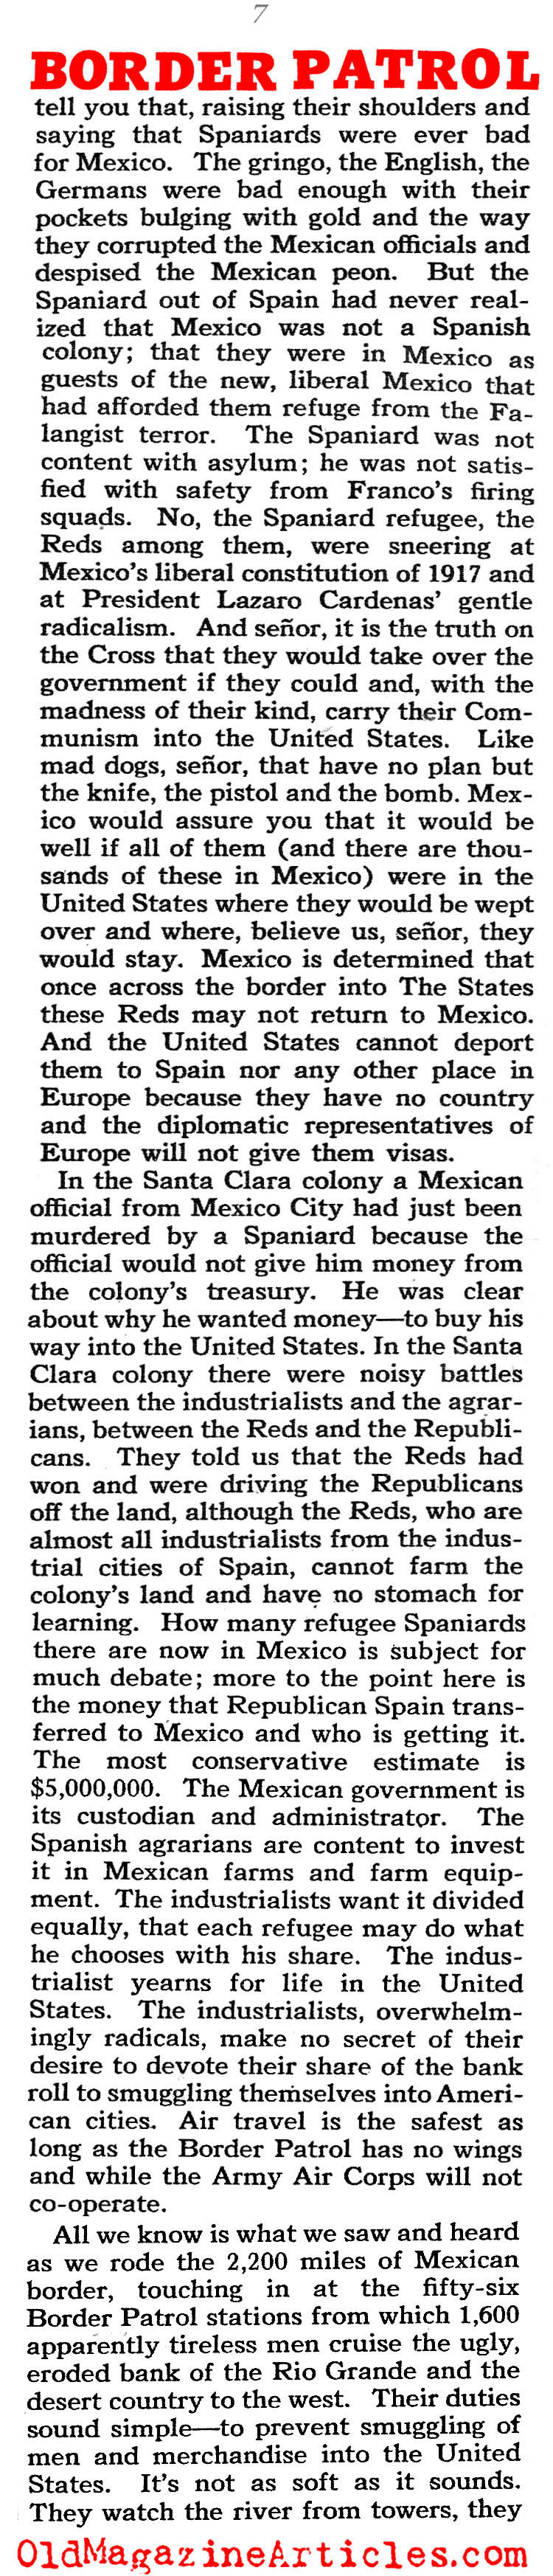 The Border Patrol (Collier's Magazine, 1940)